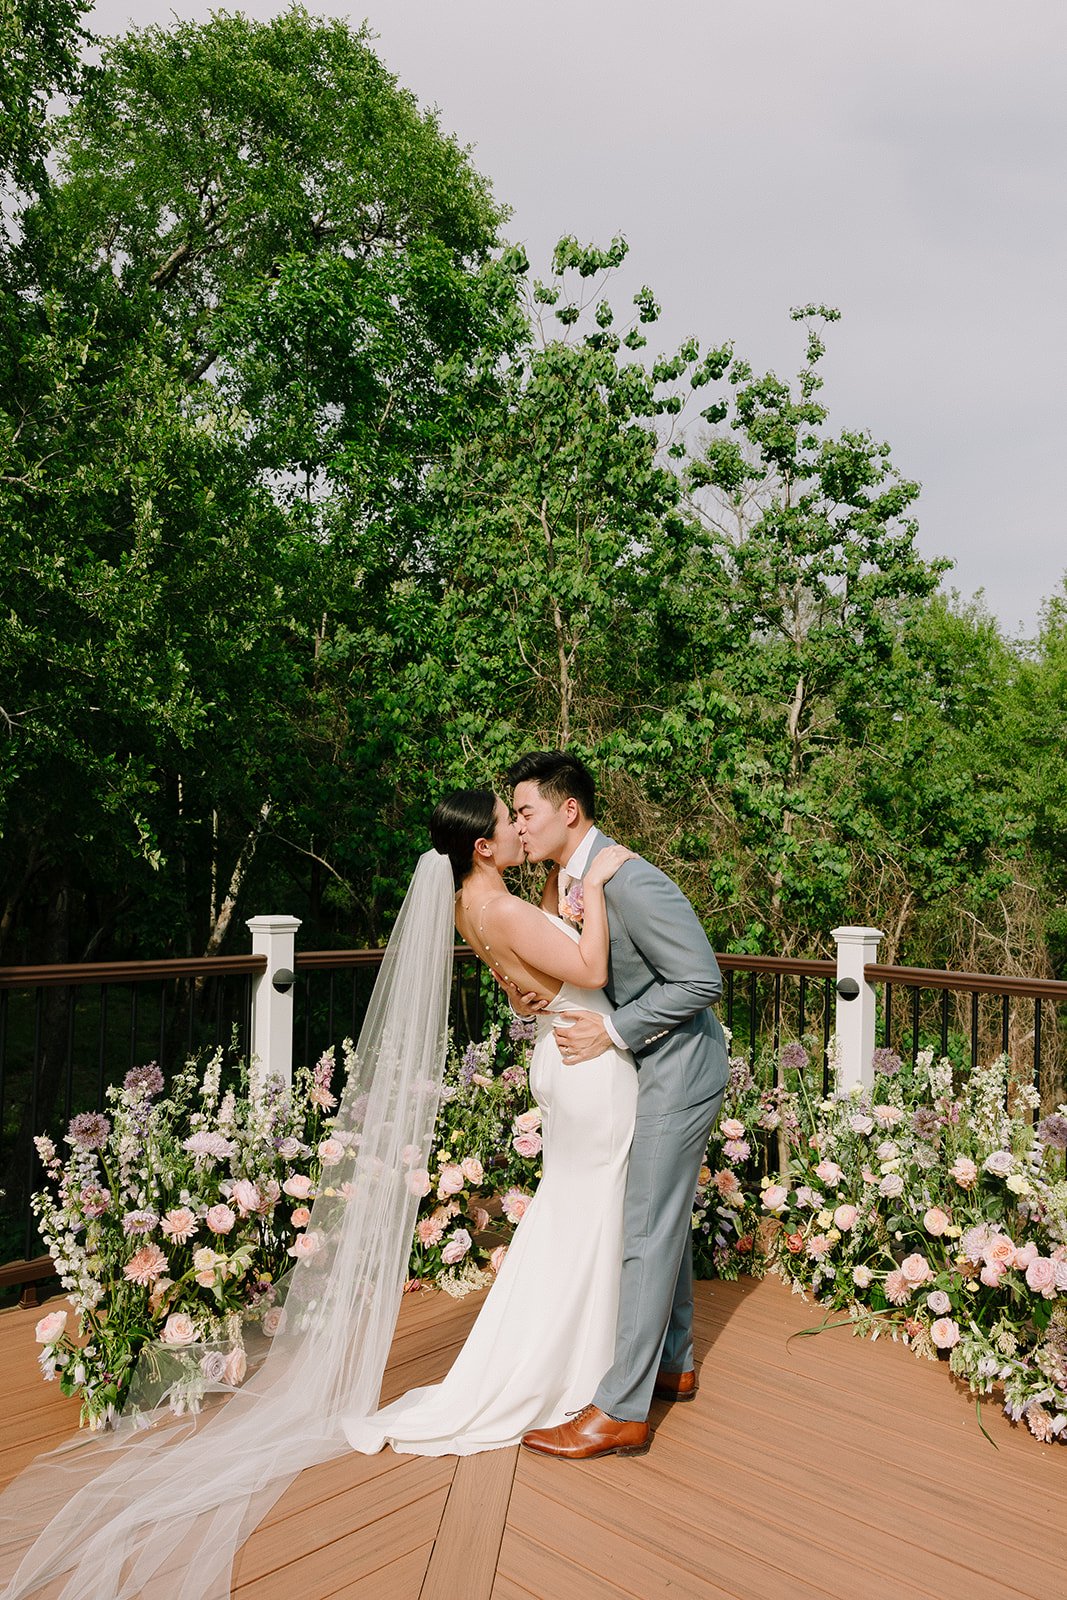 Intimate Backyard Wedding in Houston - Natalie Nicole Photo - Houston Wedding Photographer (60).jpg